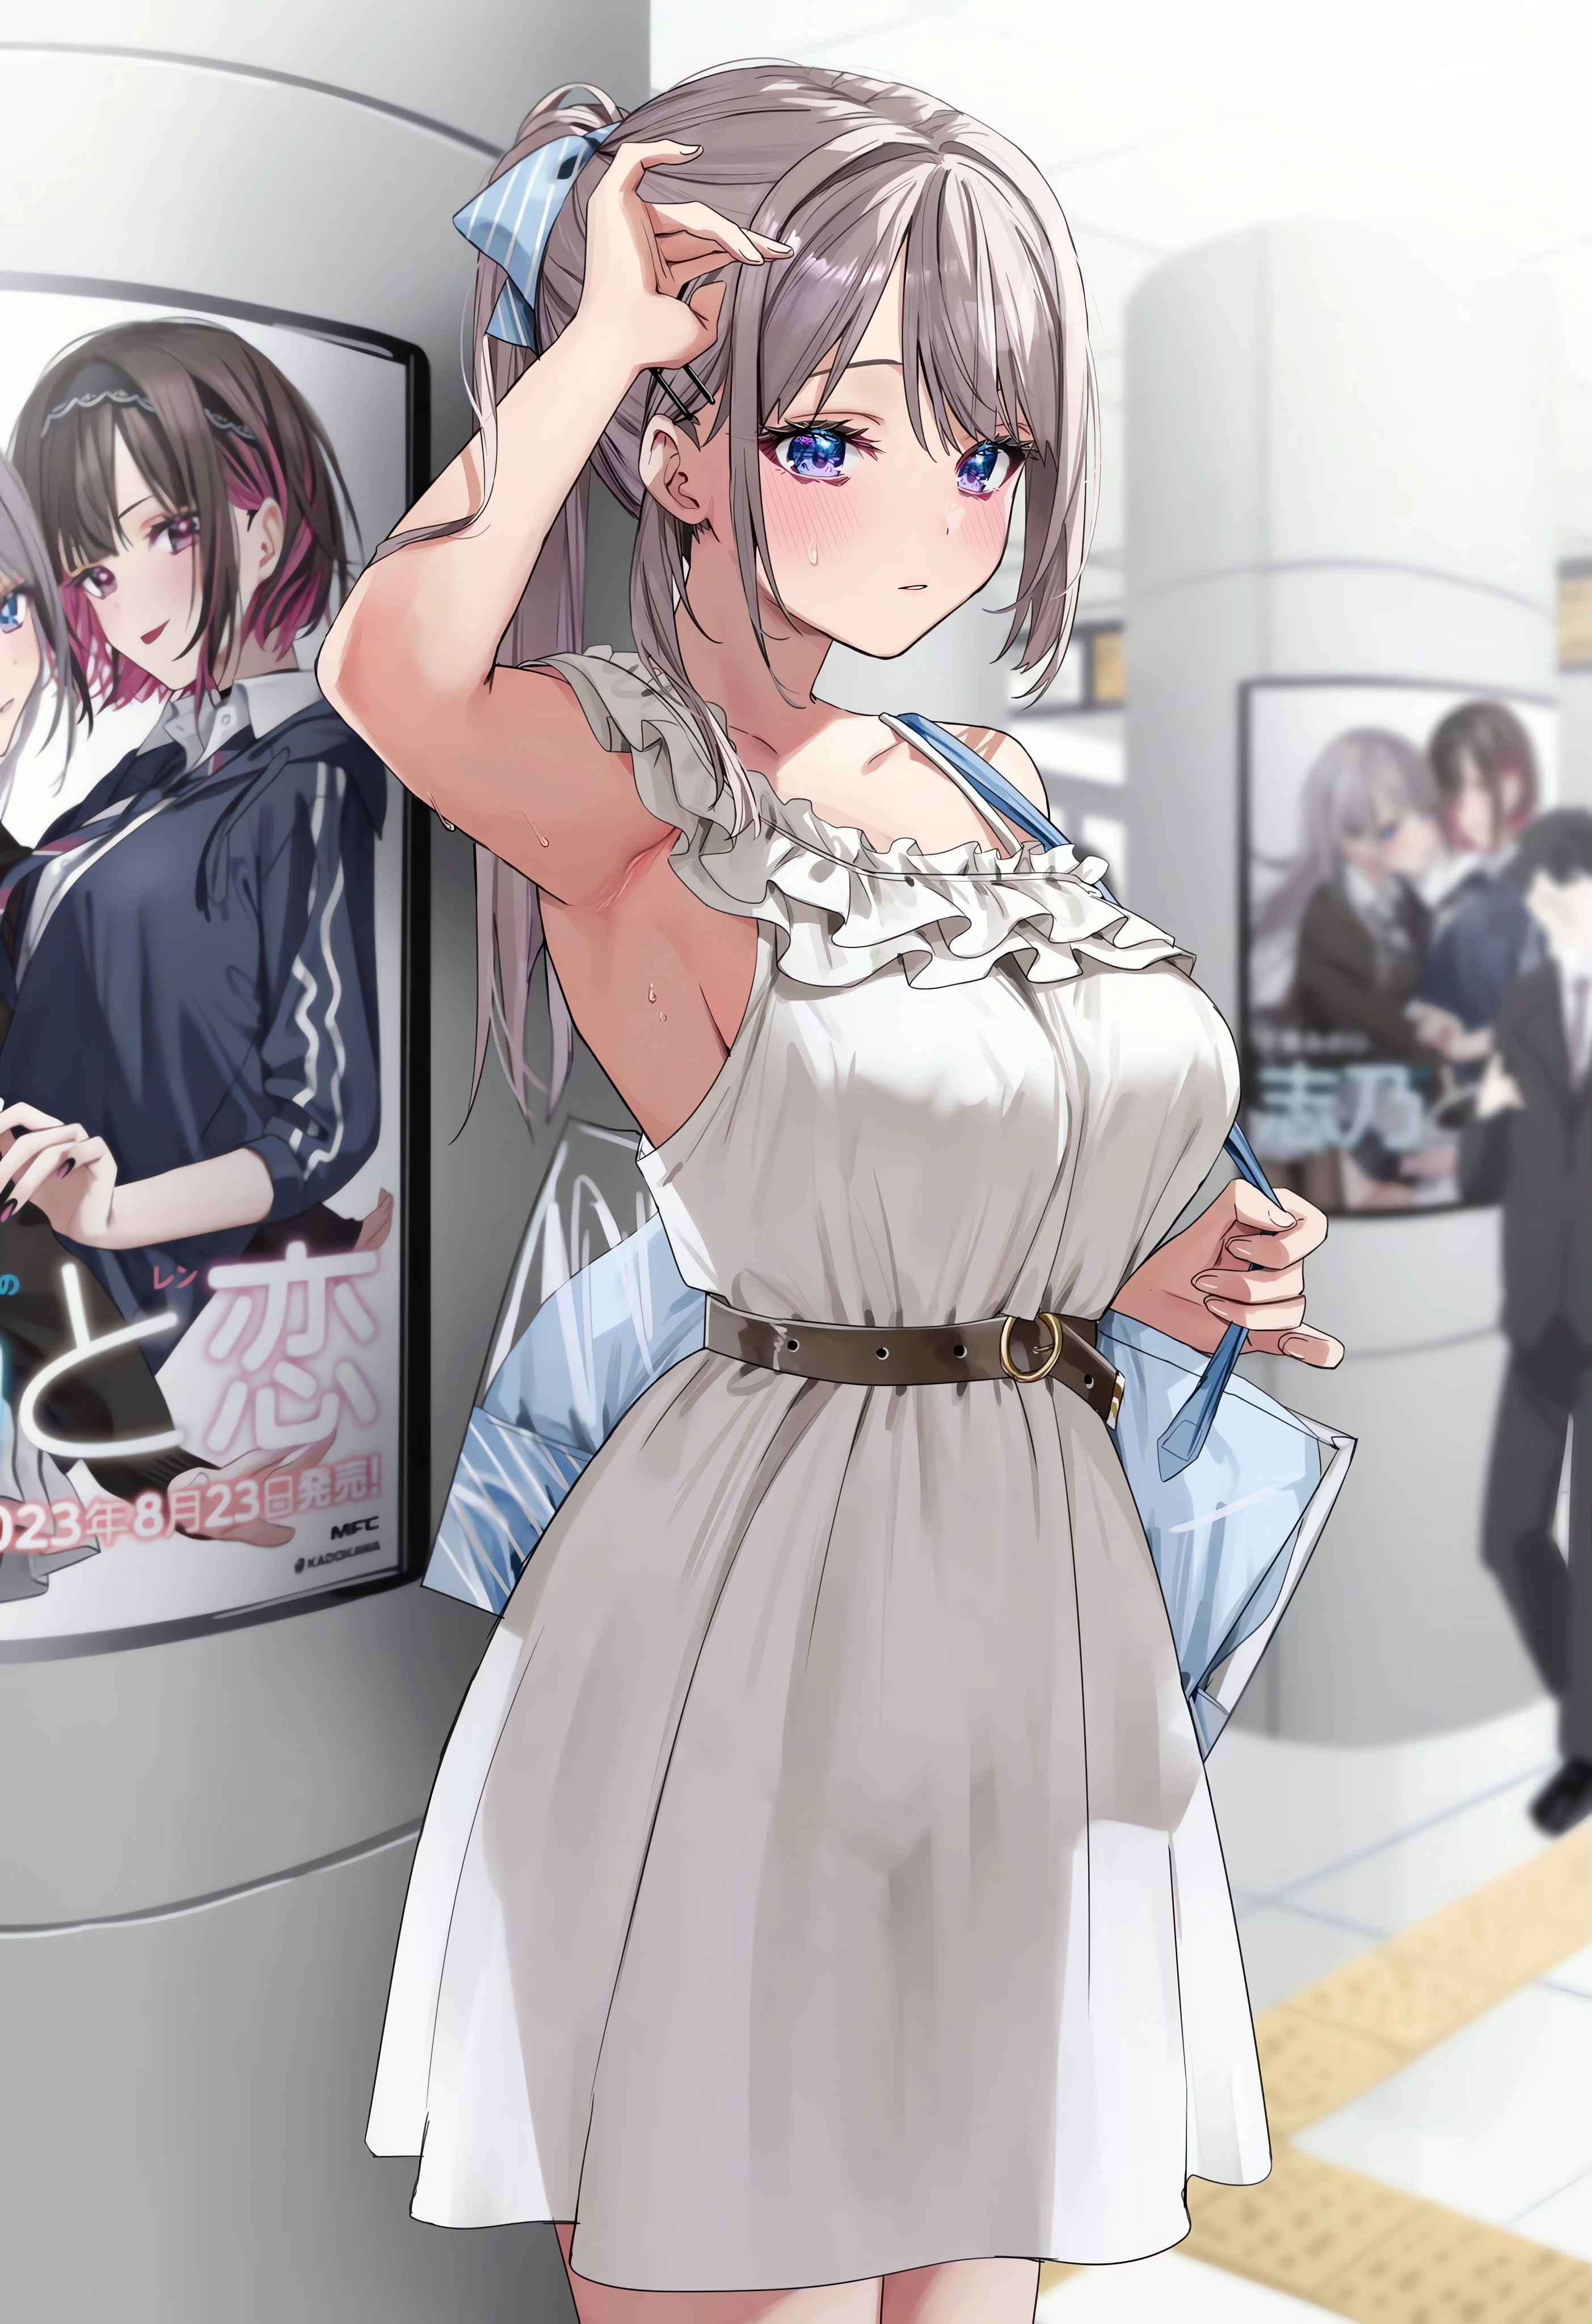 Anime 2806x4096 anime anime girls portrait display standing Japanese looking at viewer purse blushing blue eyes armpits